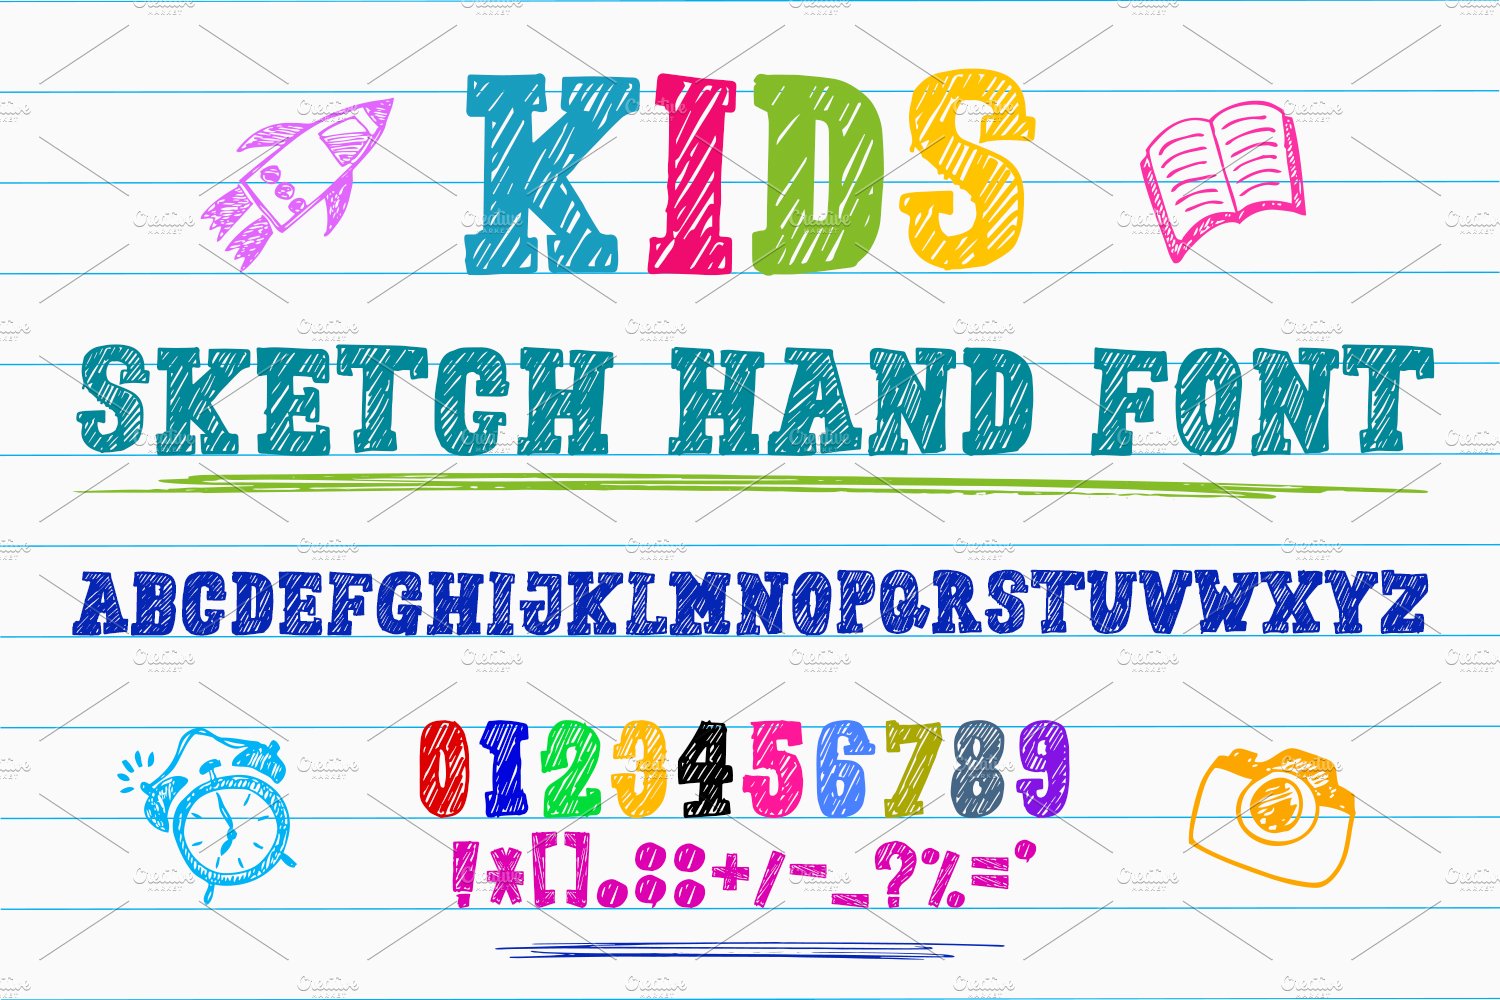 Kids Sketch Hand Font cover image.